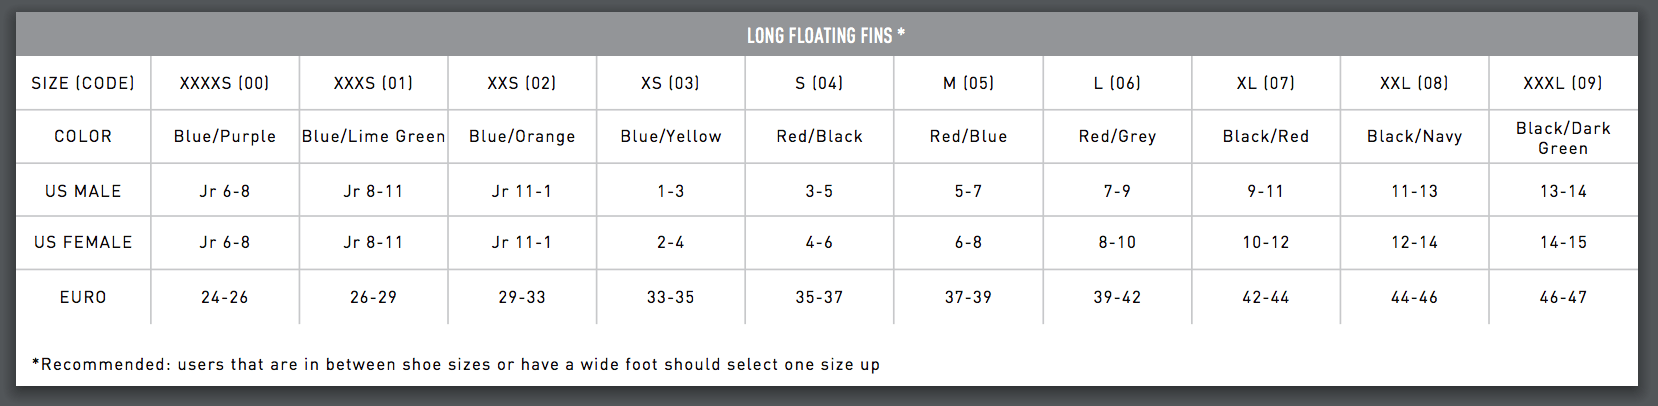 Finis Swim Fins Size Chart